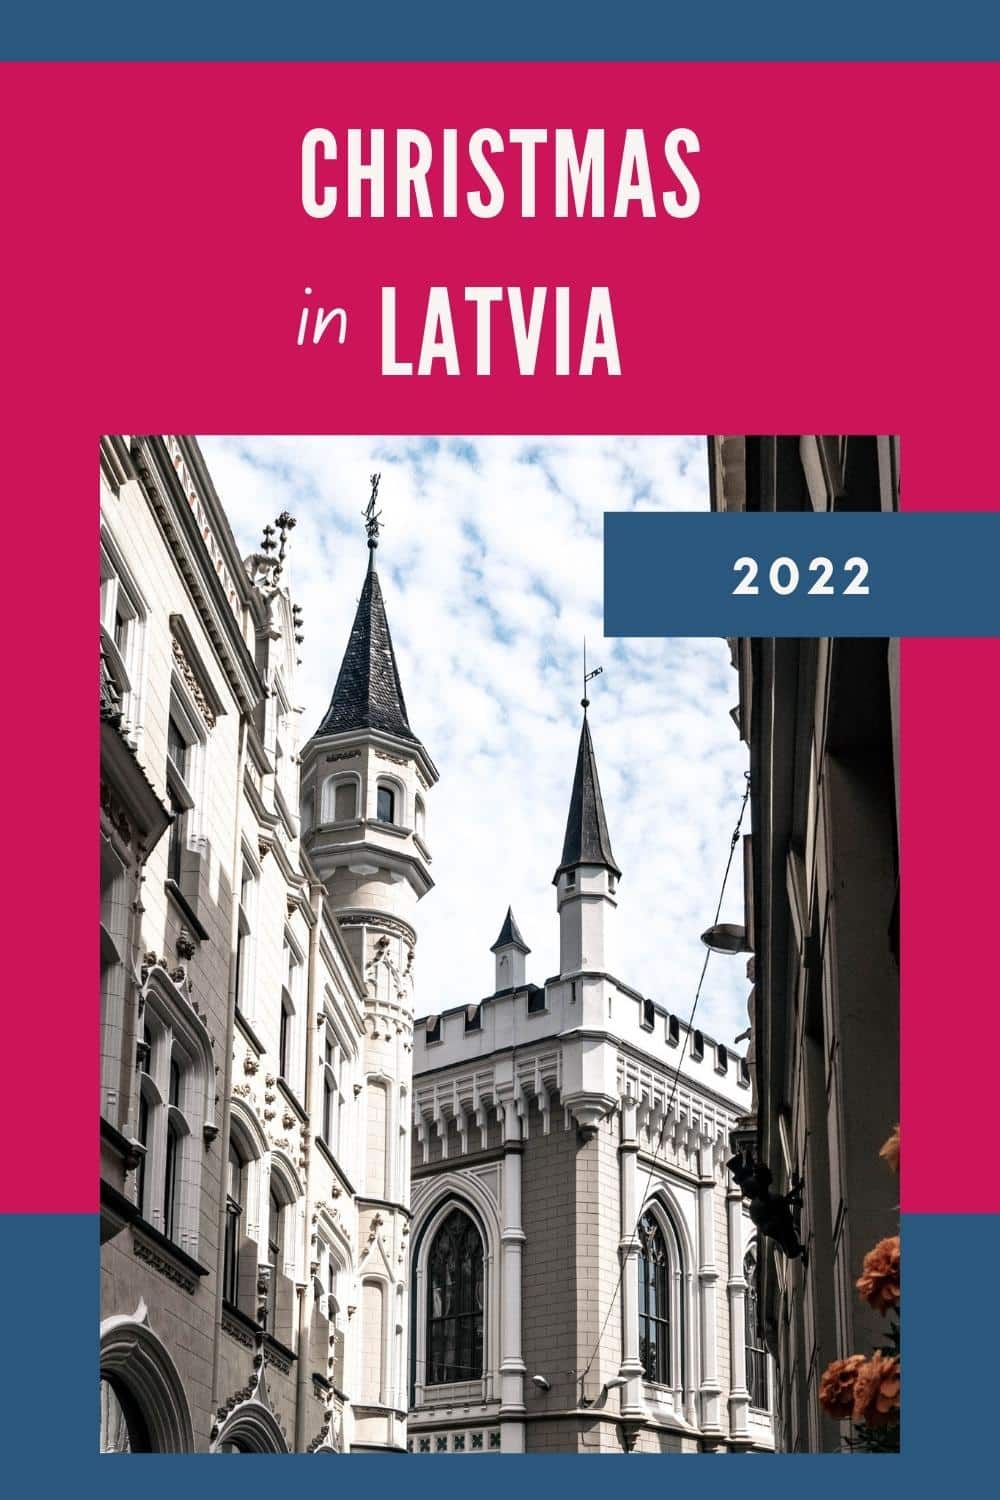 Historic buildings in the centre of Riga, Latvia